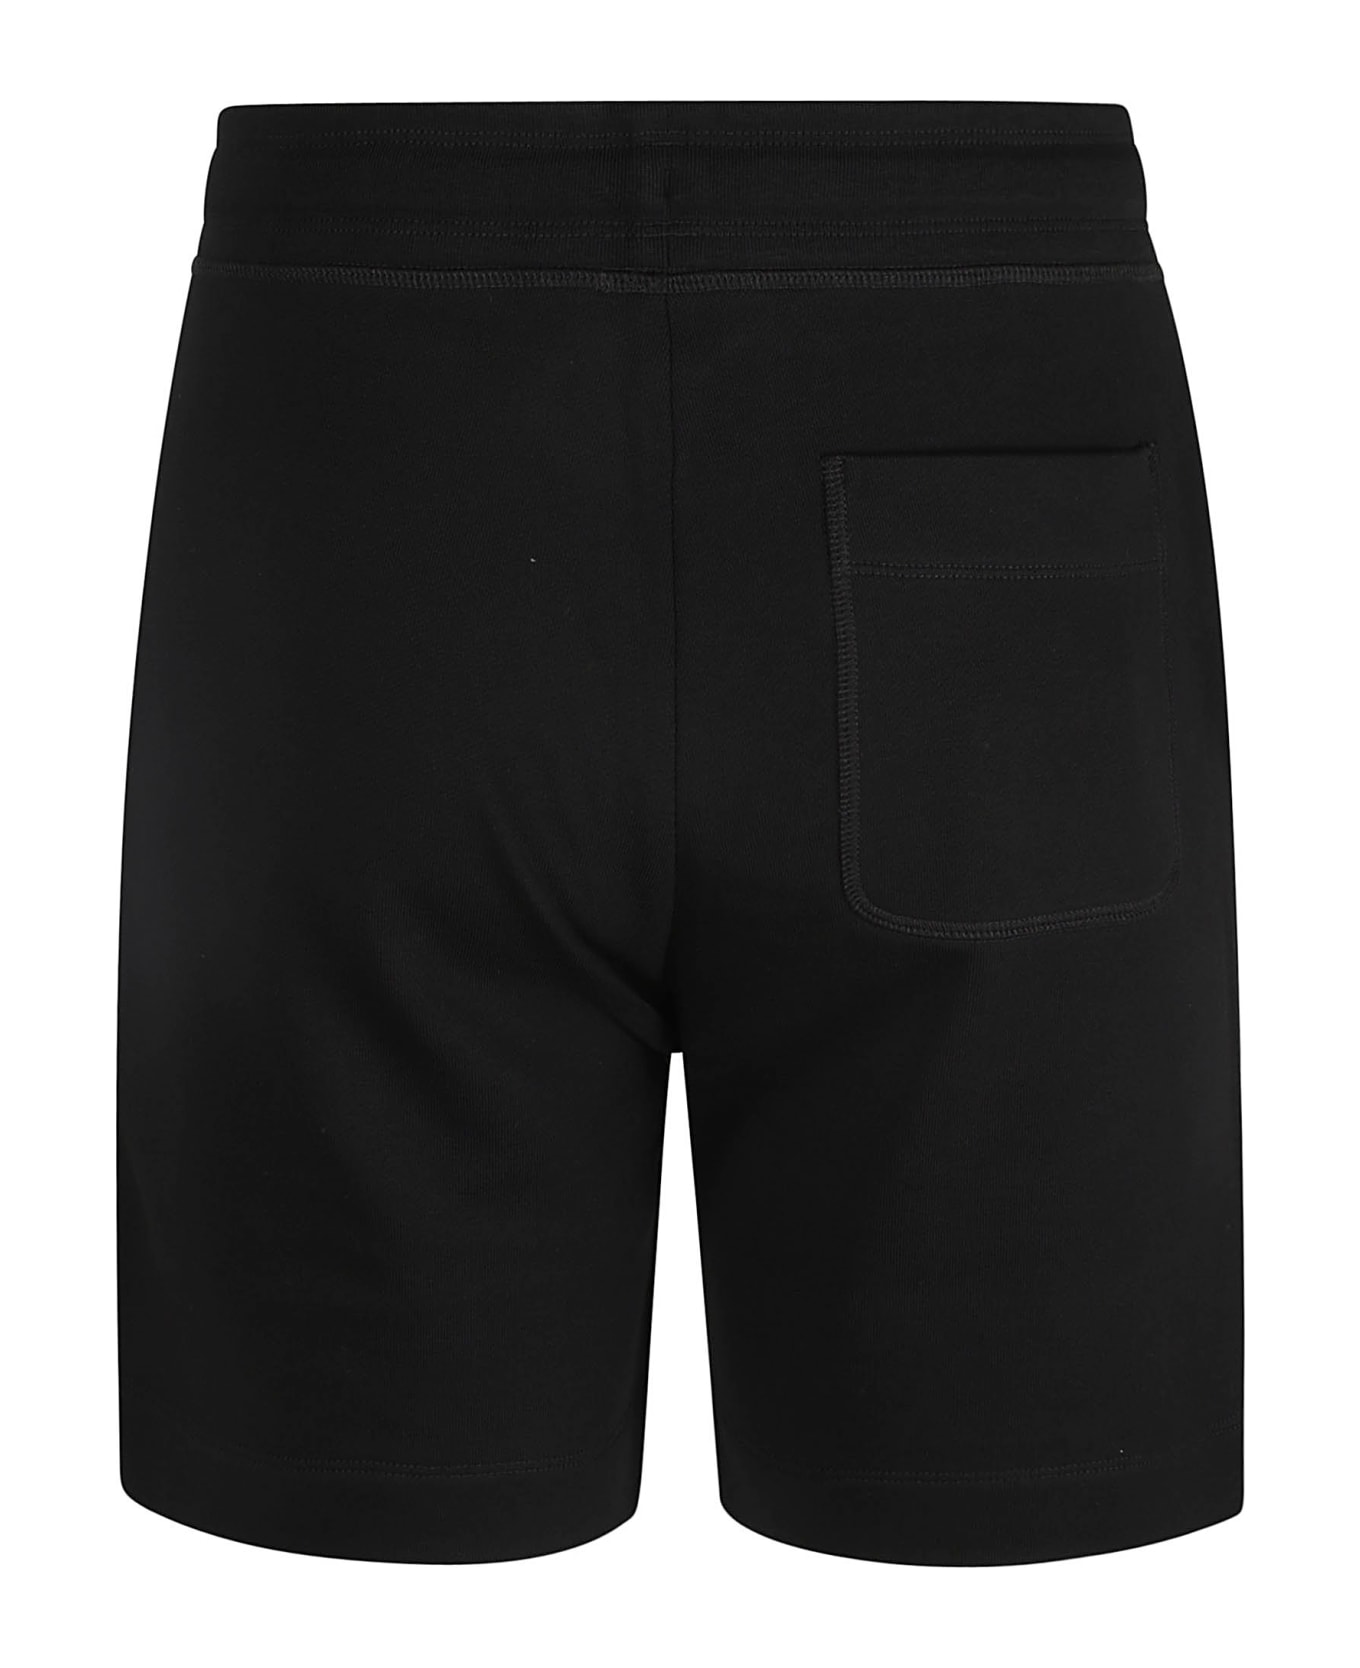 Canada Goose Lace-up Shorts - Black